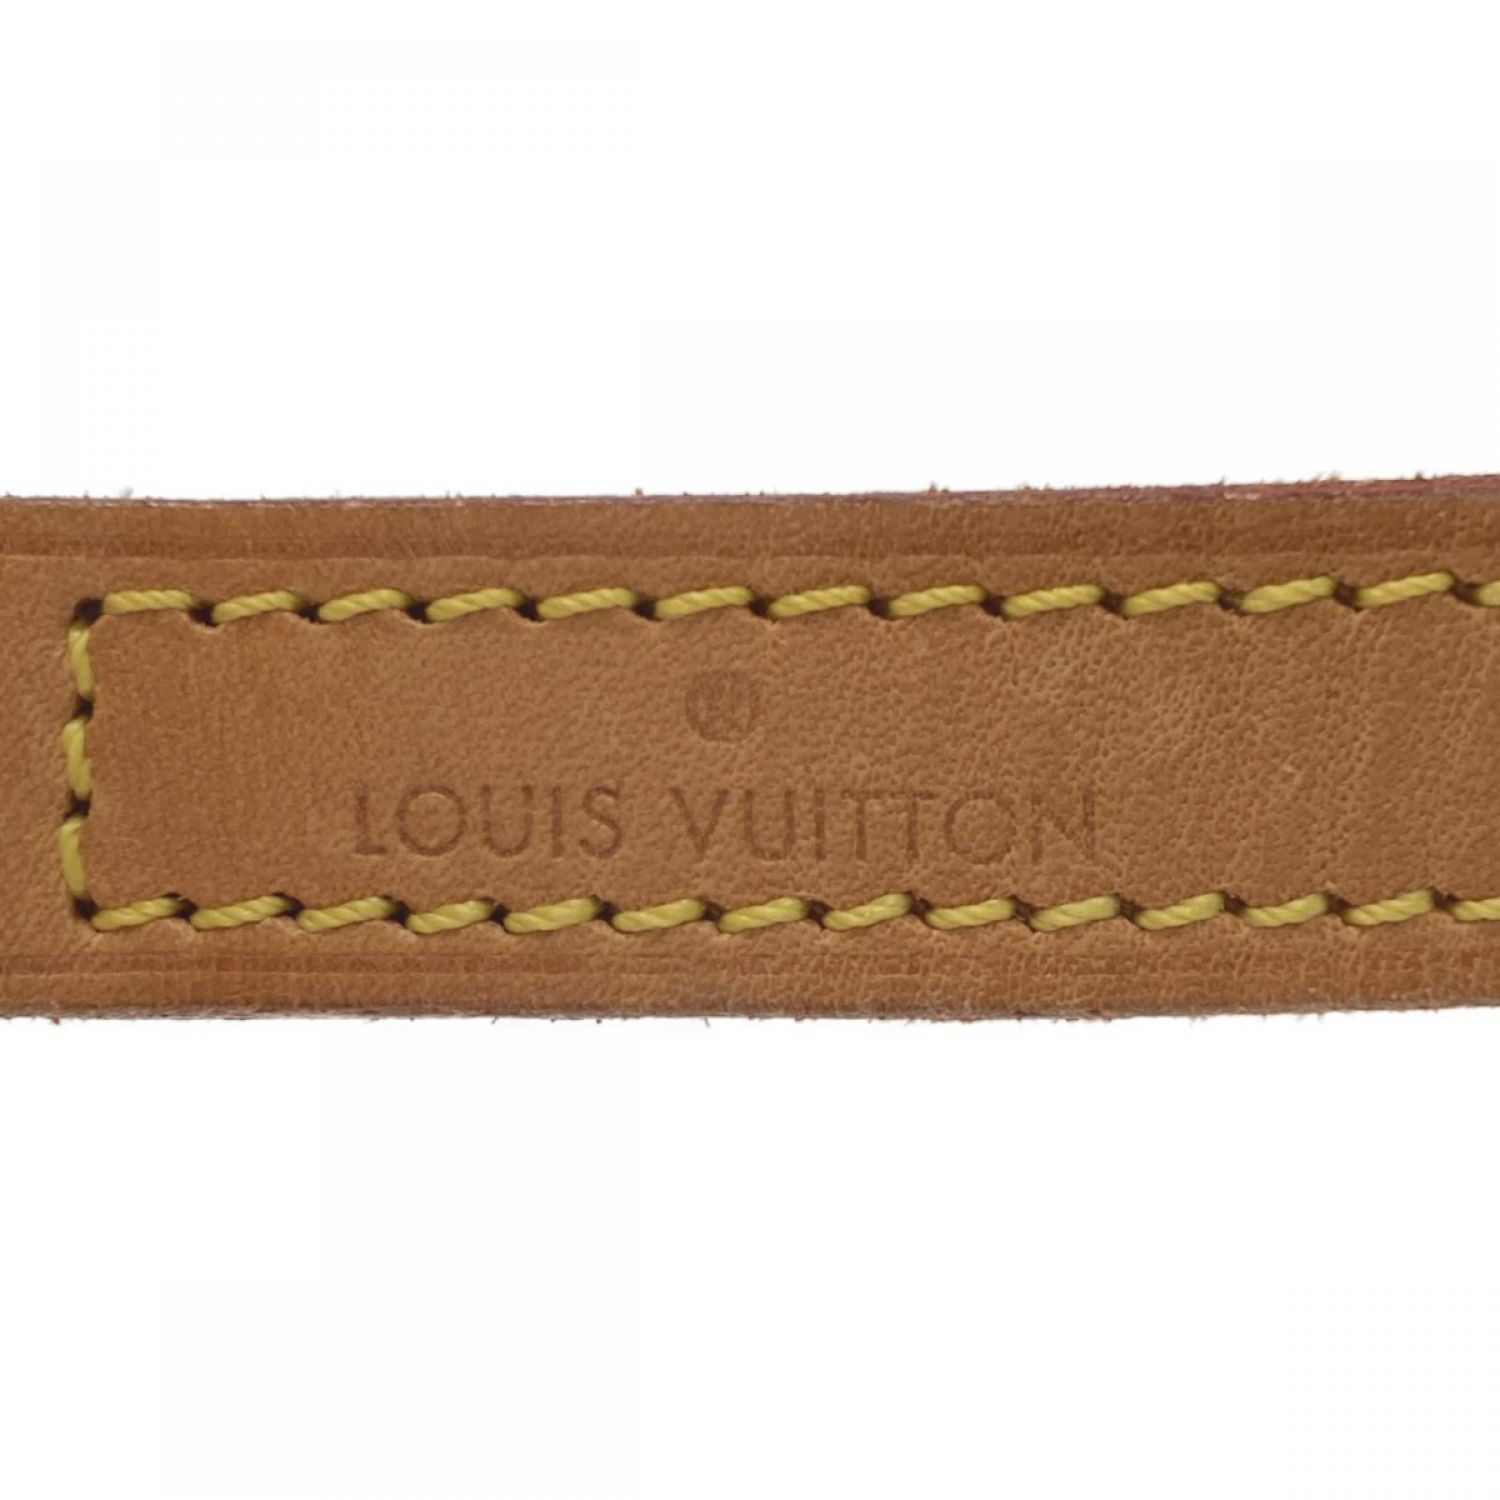 LOUIS VUITTON ショルダーストラップ ヌメ革 ゴールド金具 刻印